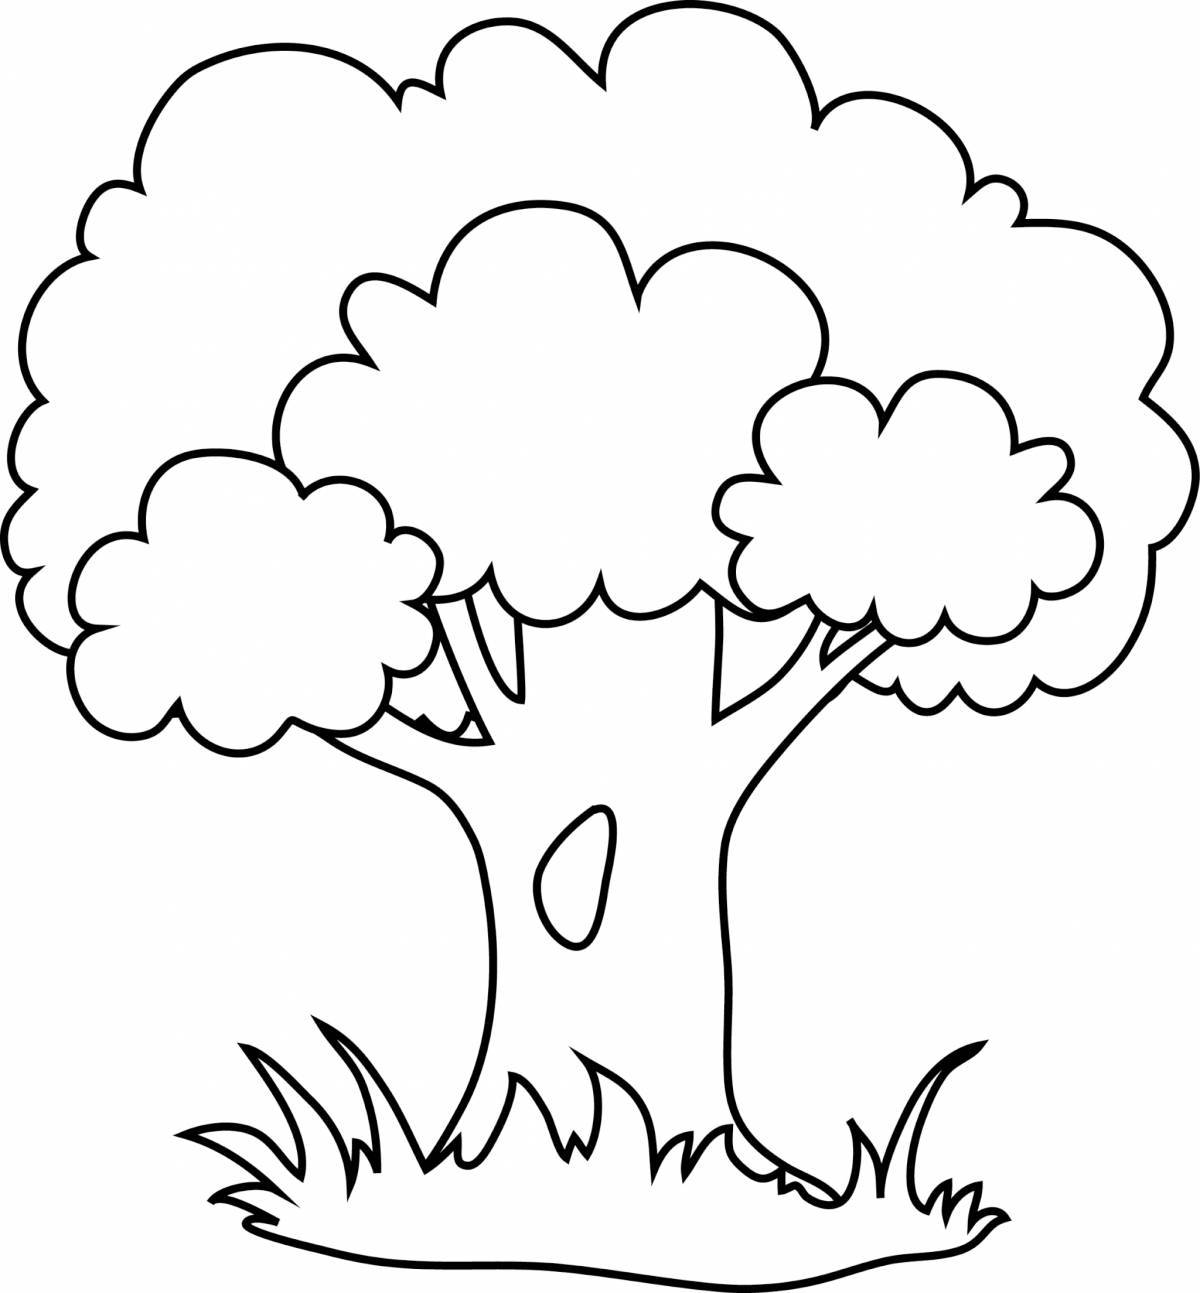 Страница раскраски glitzy tree для детей